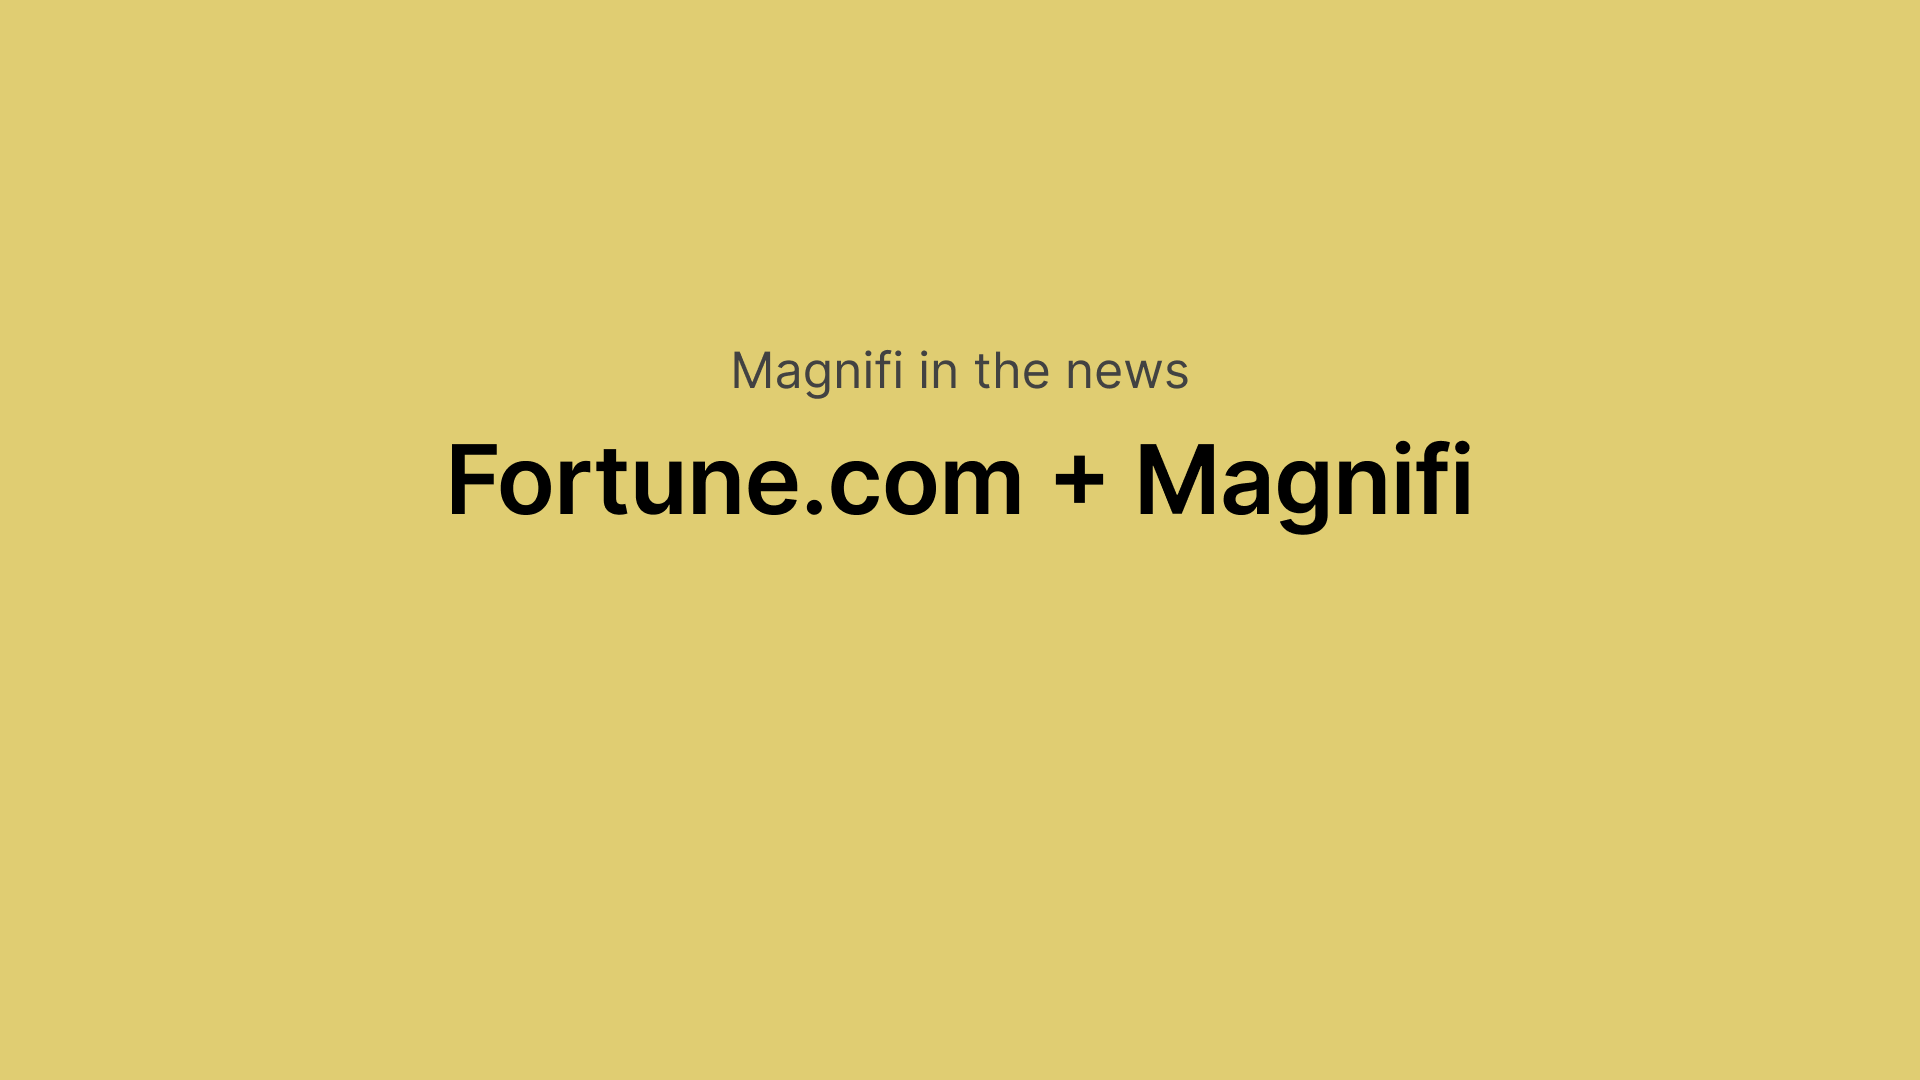 "Magnifi in the news
Fortune.com + Magnifi"